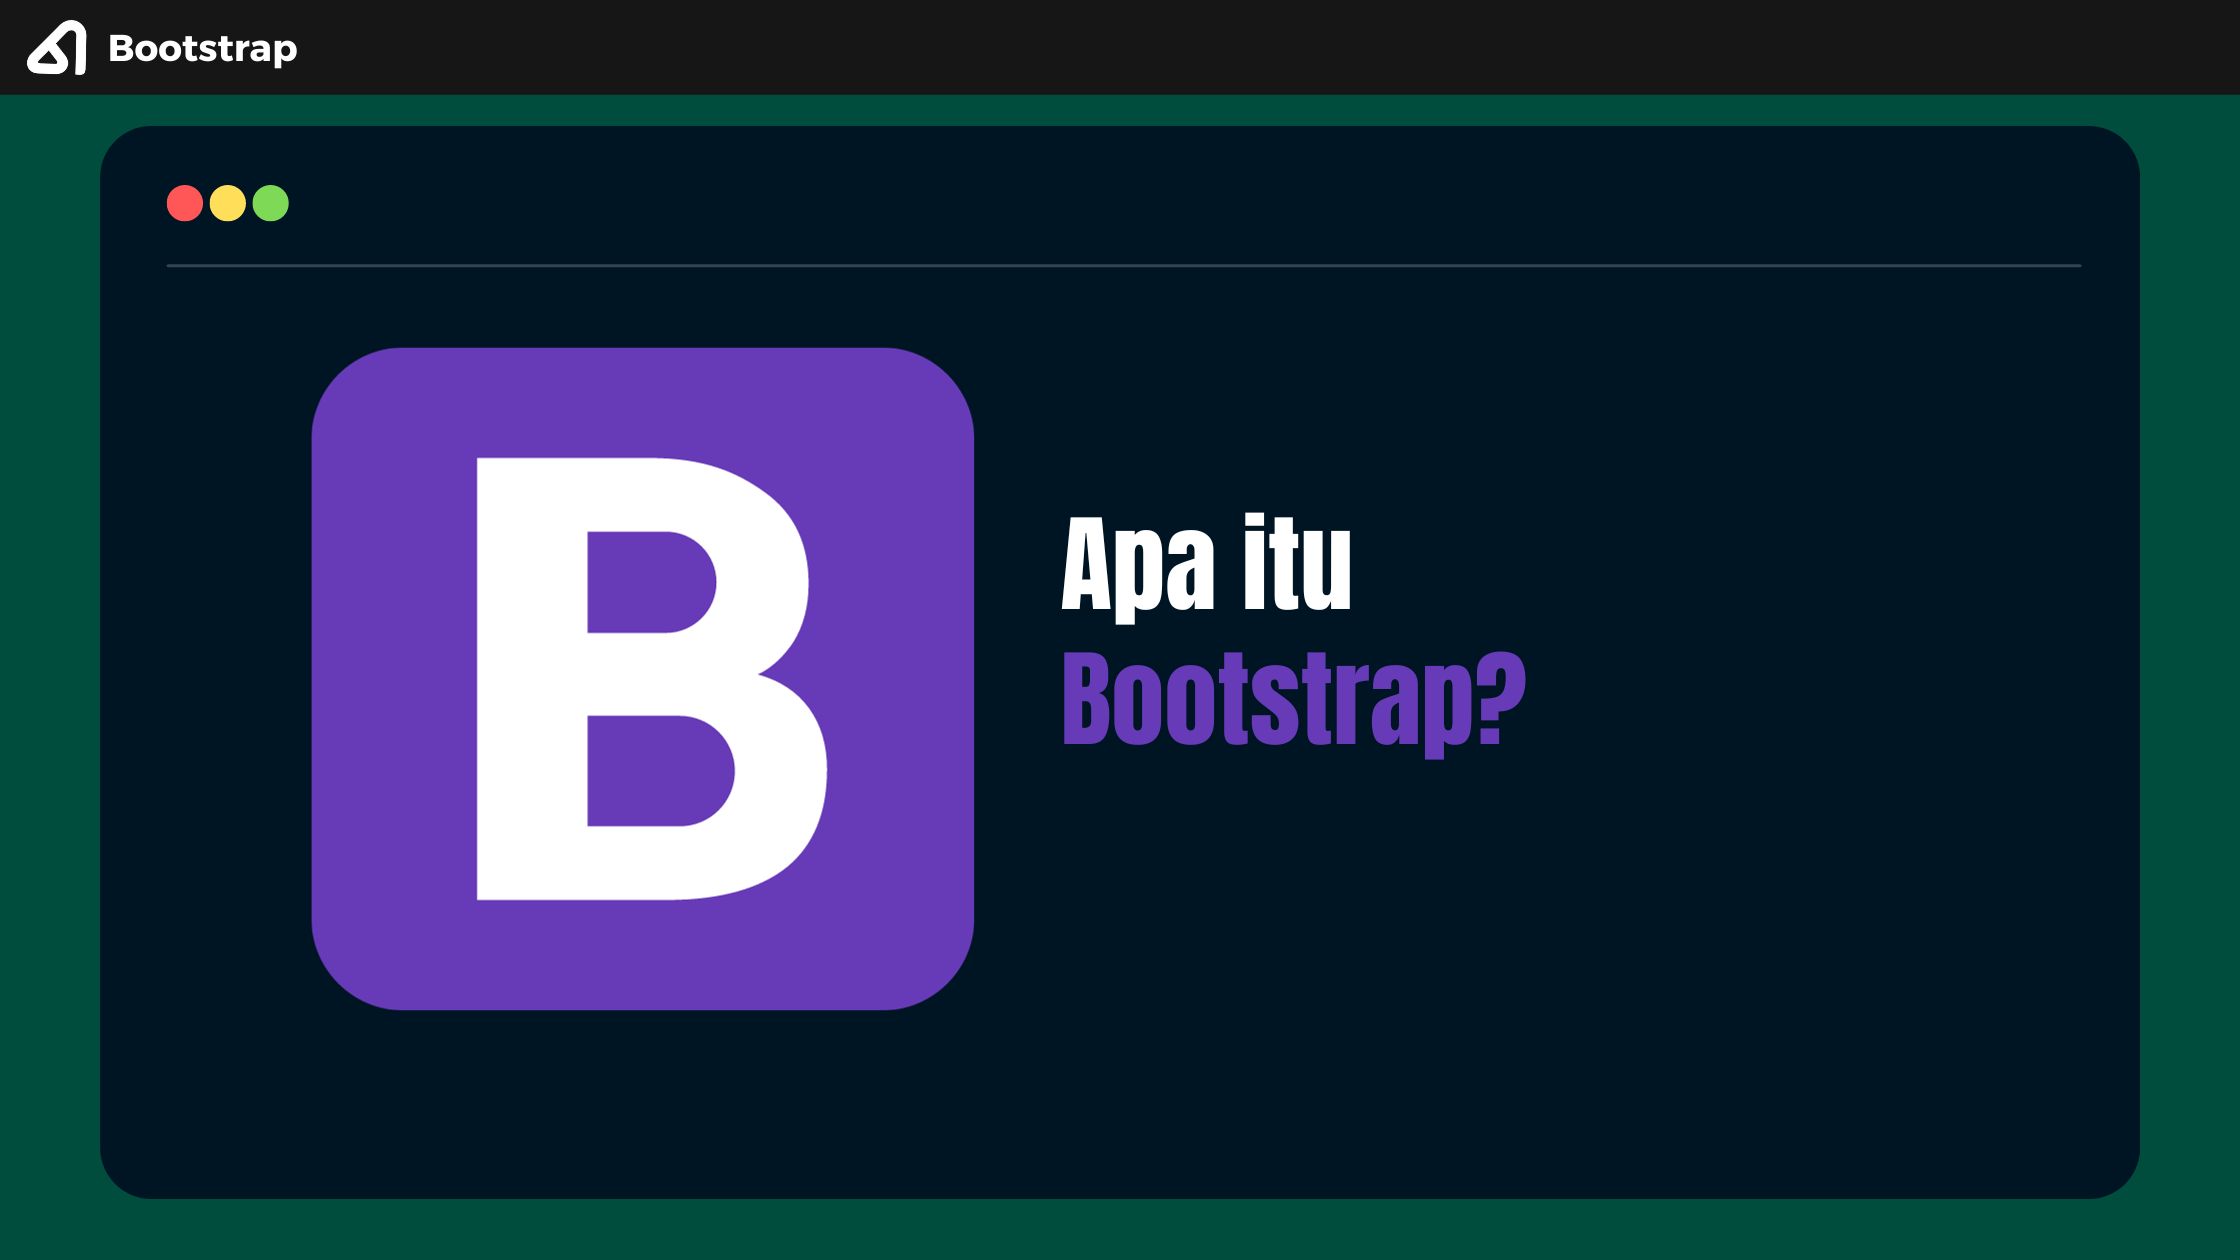 Apa itu Bootstrap